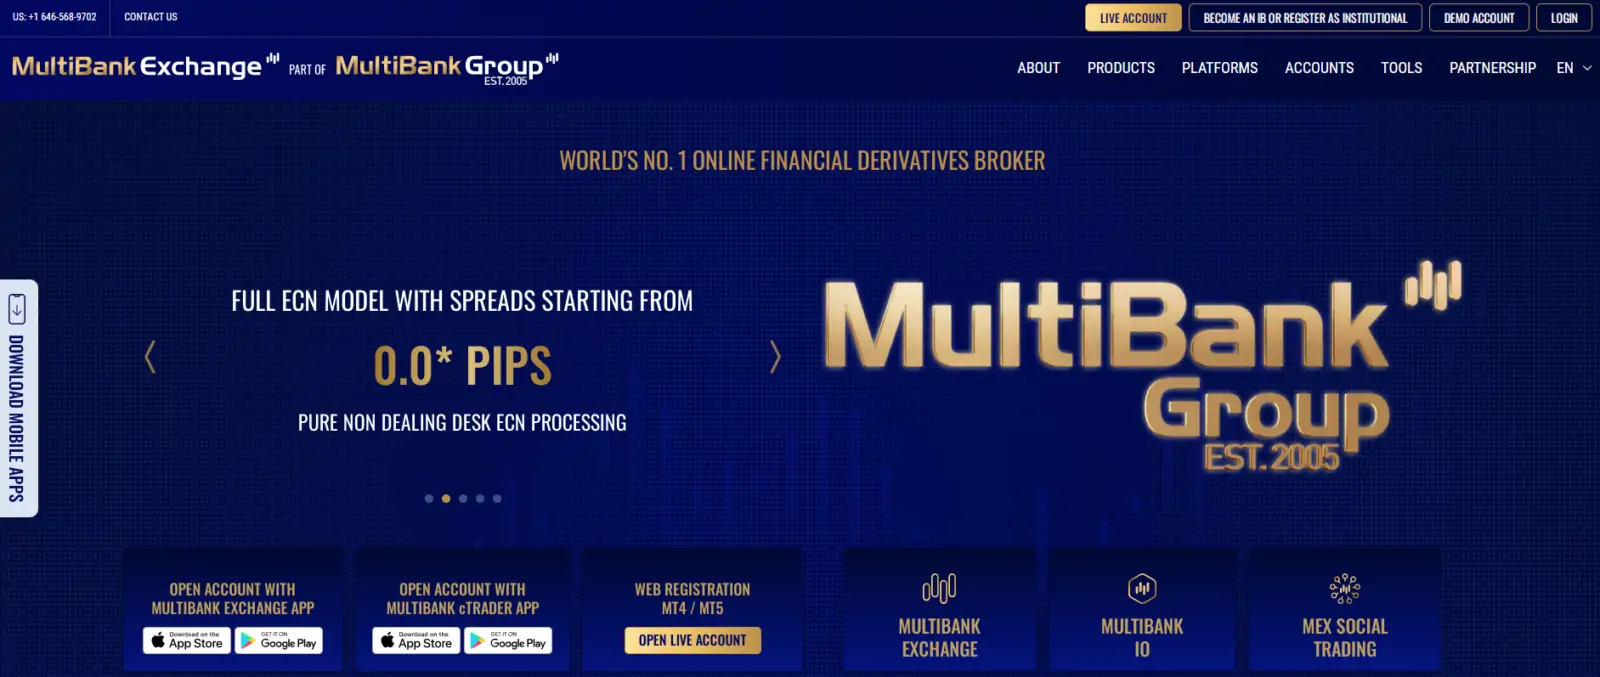 Aperçu du projet d'investissement du Groupe MultiBank